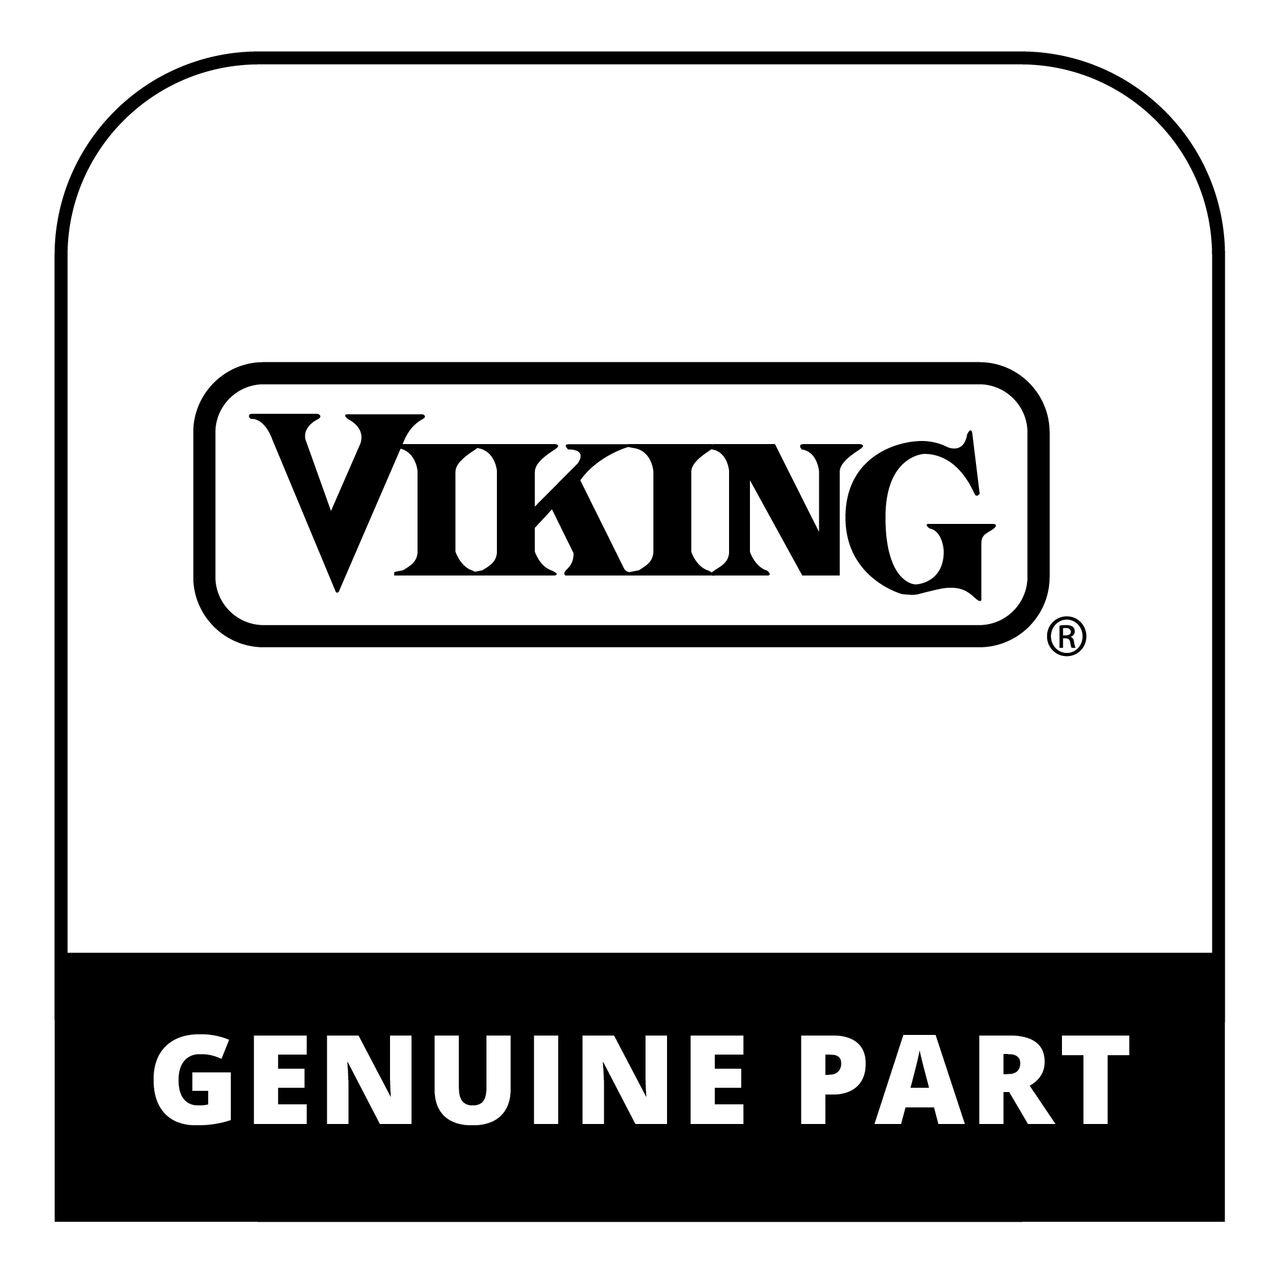 Viking 000645-000 - ENCLOSURE FUEL CATCH - LH - Genuine Viking Part